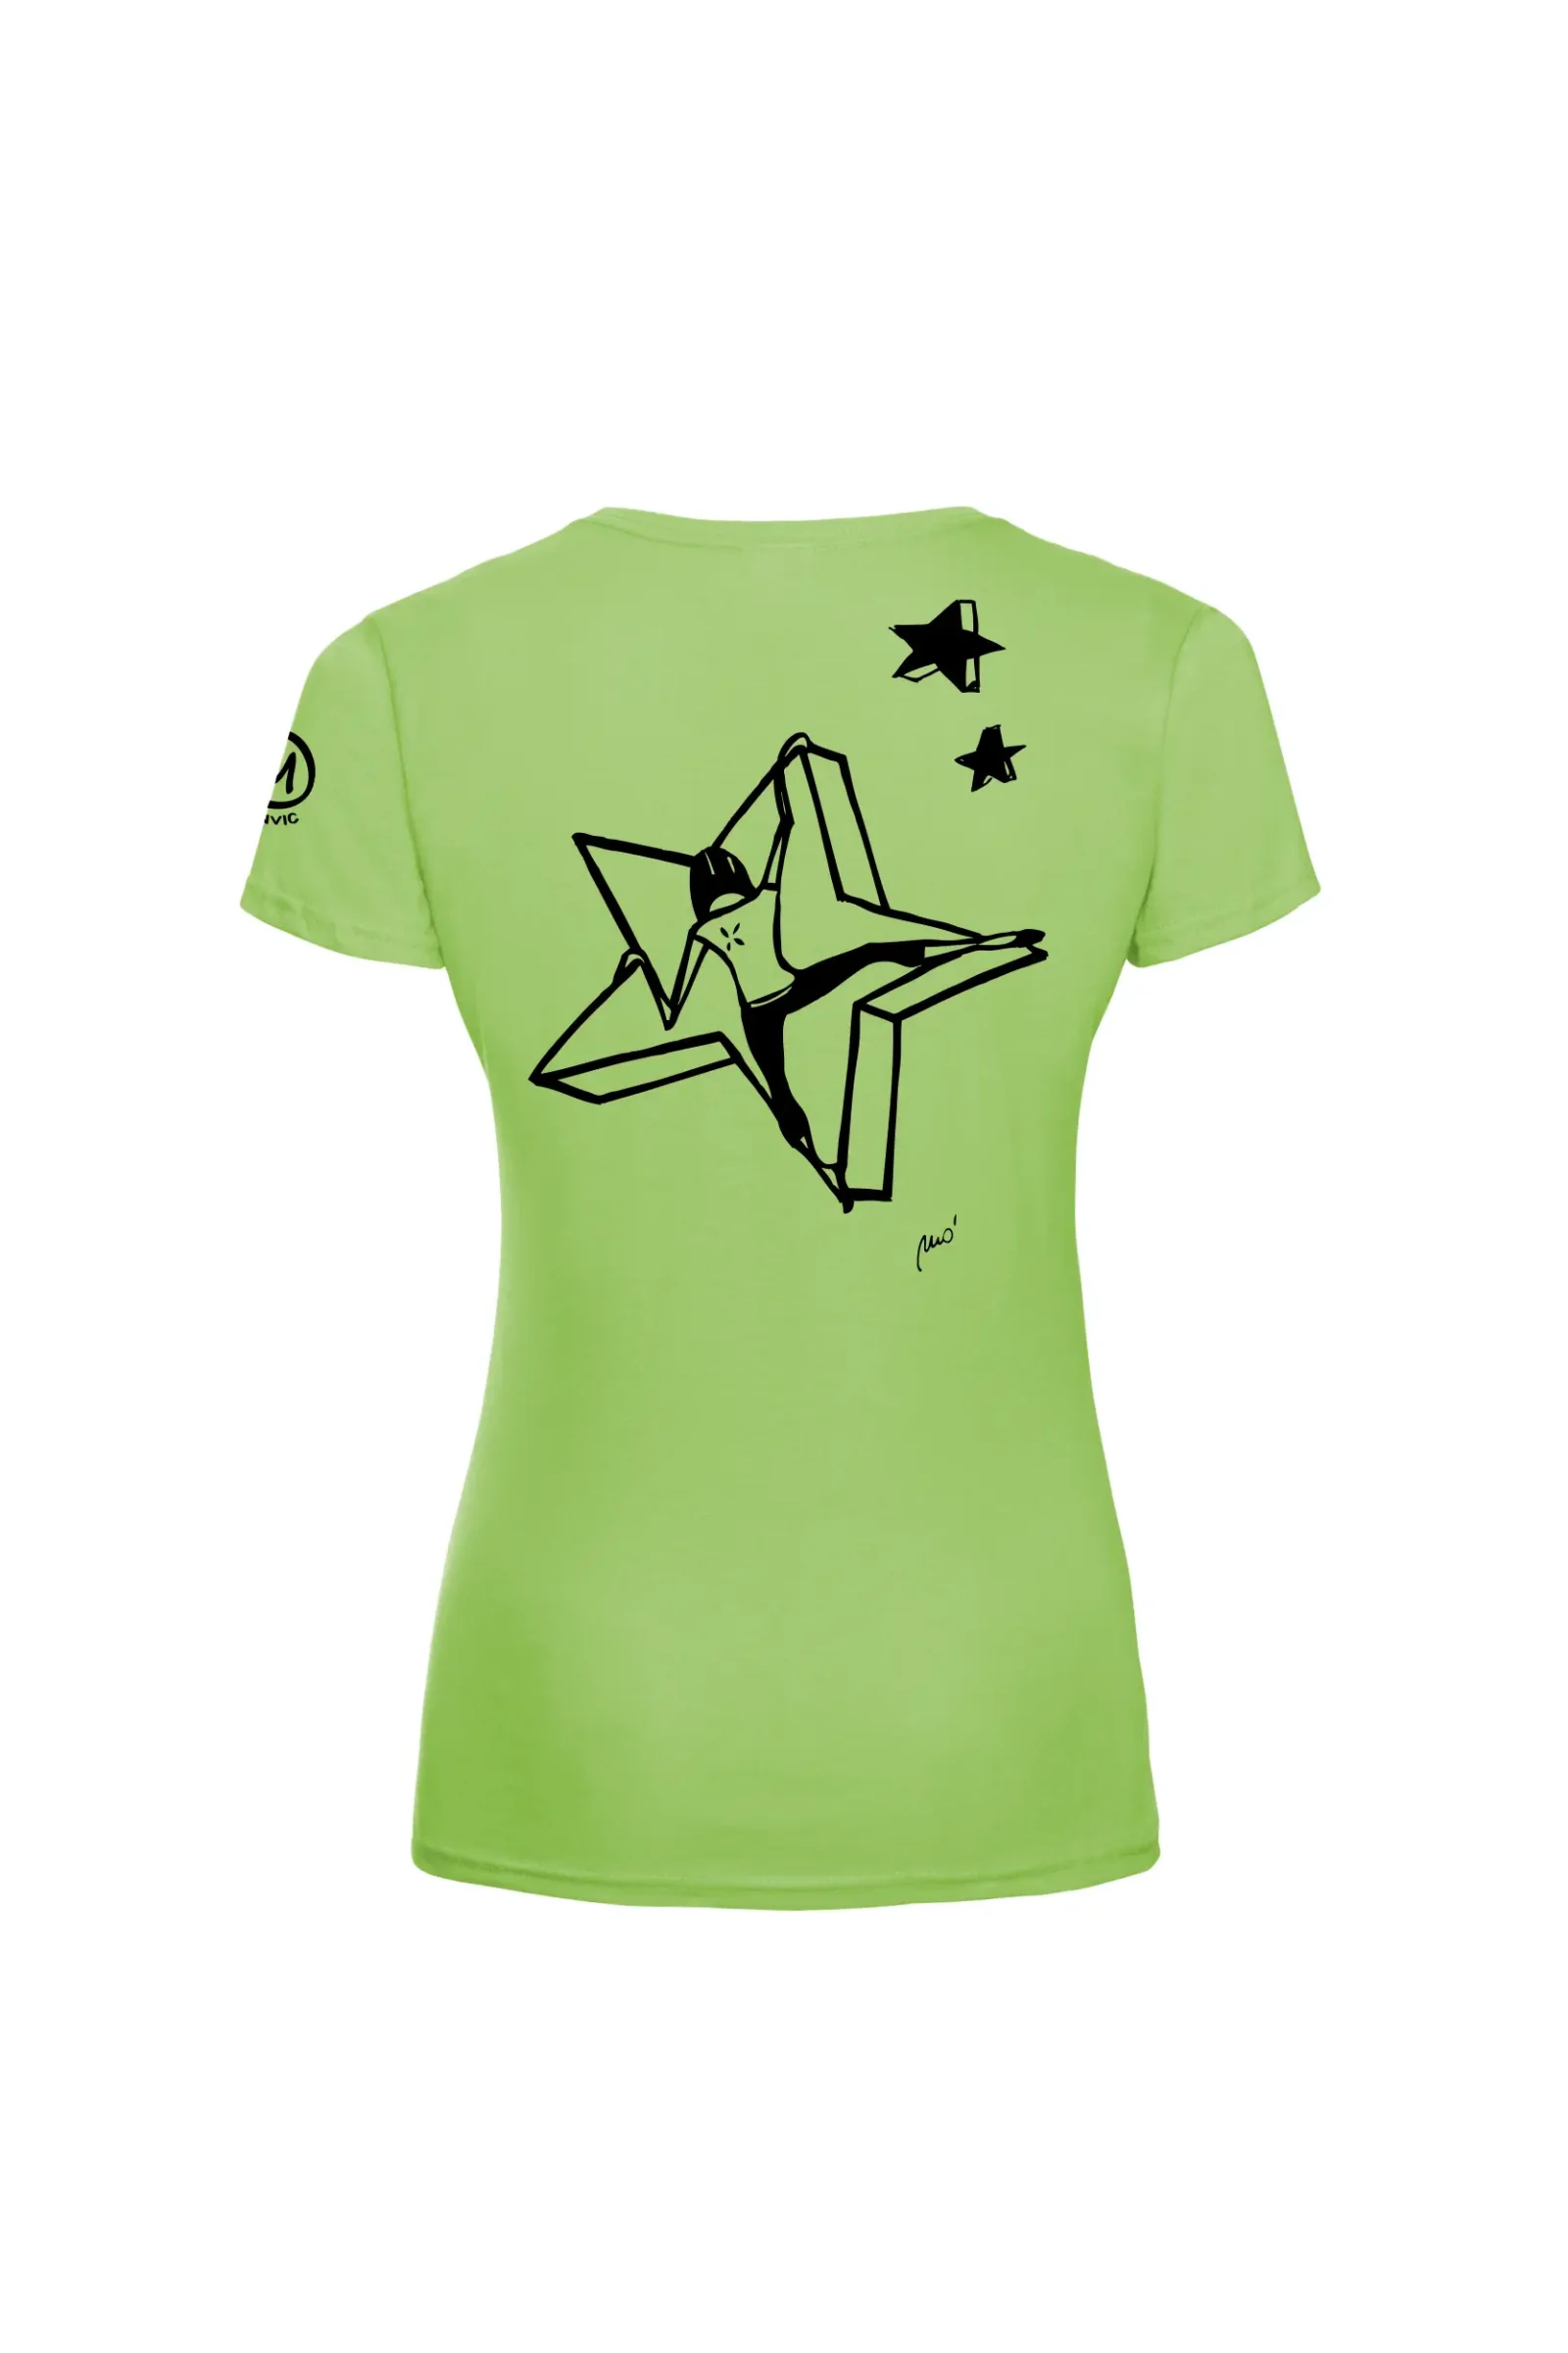 T-shirt arrampicata donna - cotone verde lime - grafica "Azi" - SHARON by MONVIC